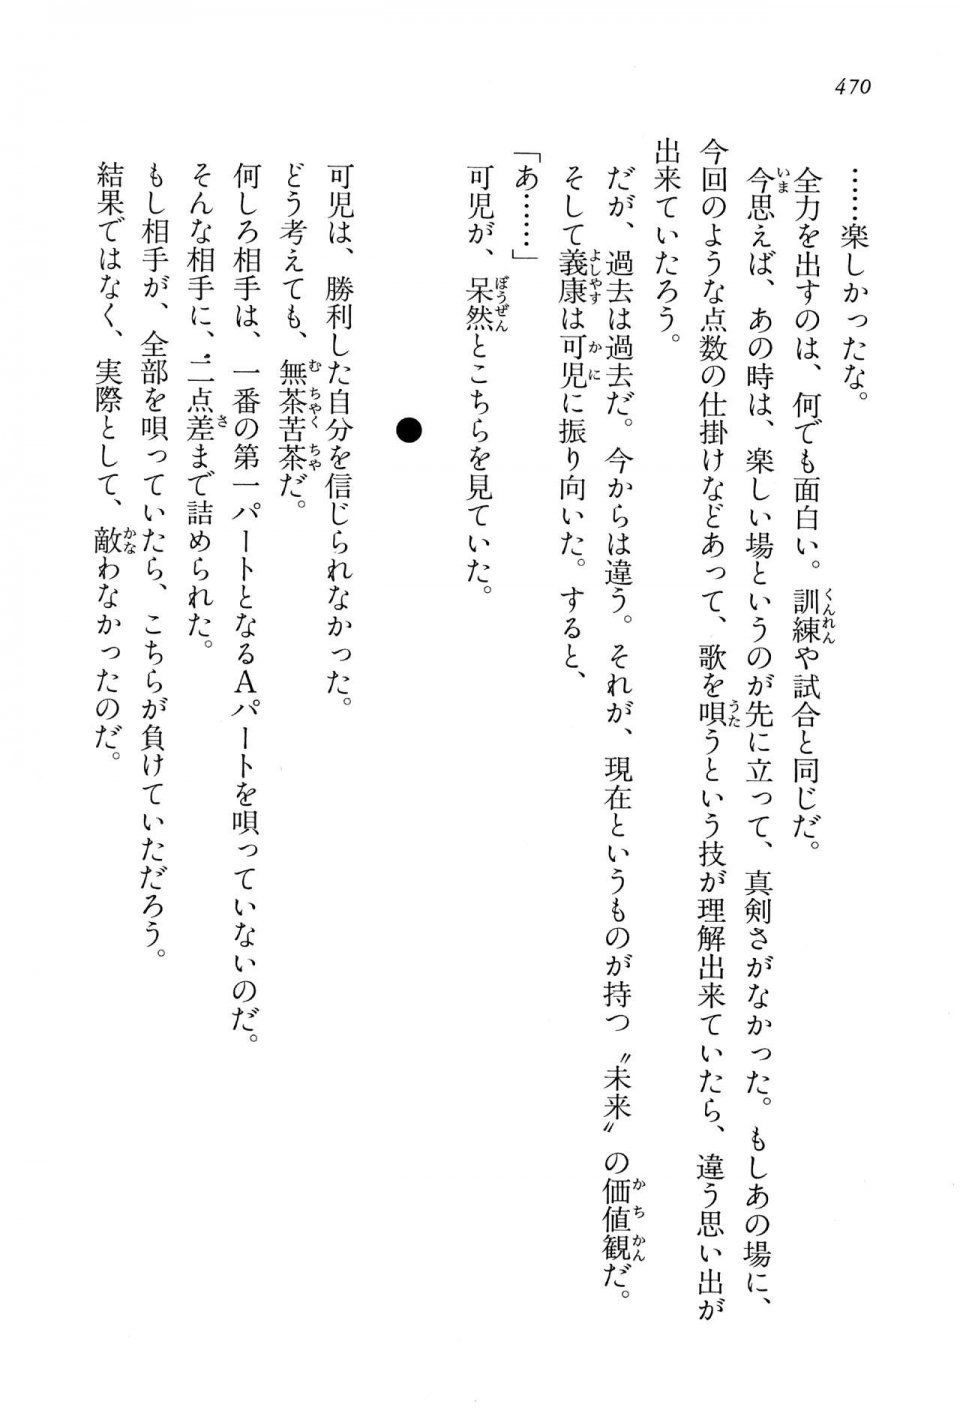 Kyoukai Senjou no Horizon LN Vol 15(6C) Part 1 - Photo #470